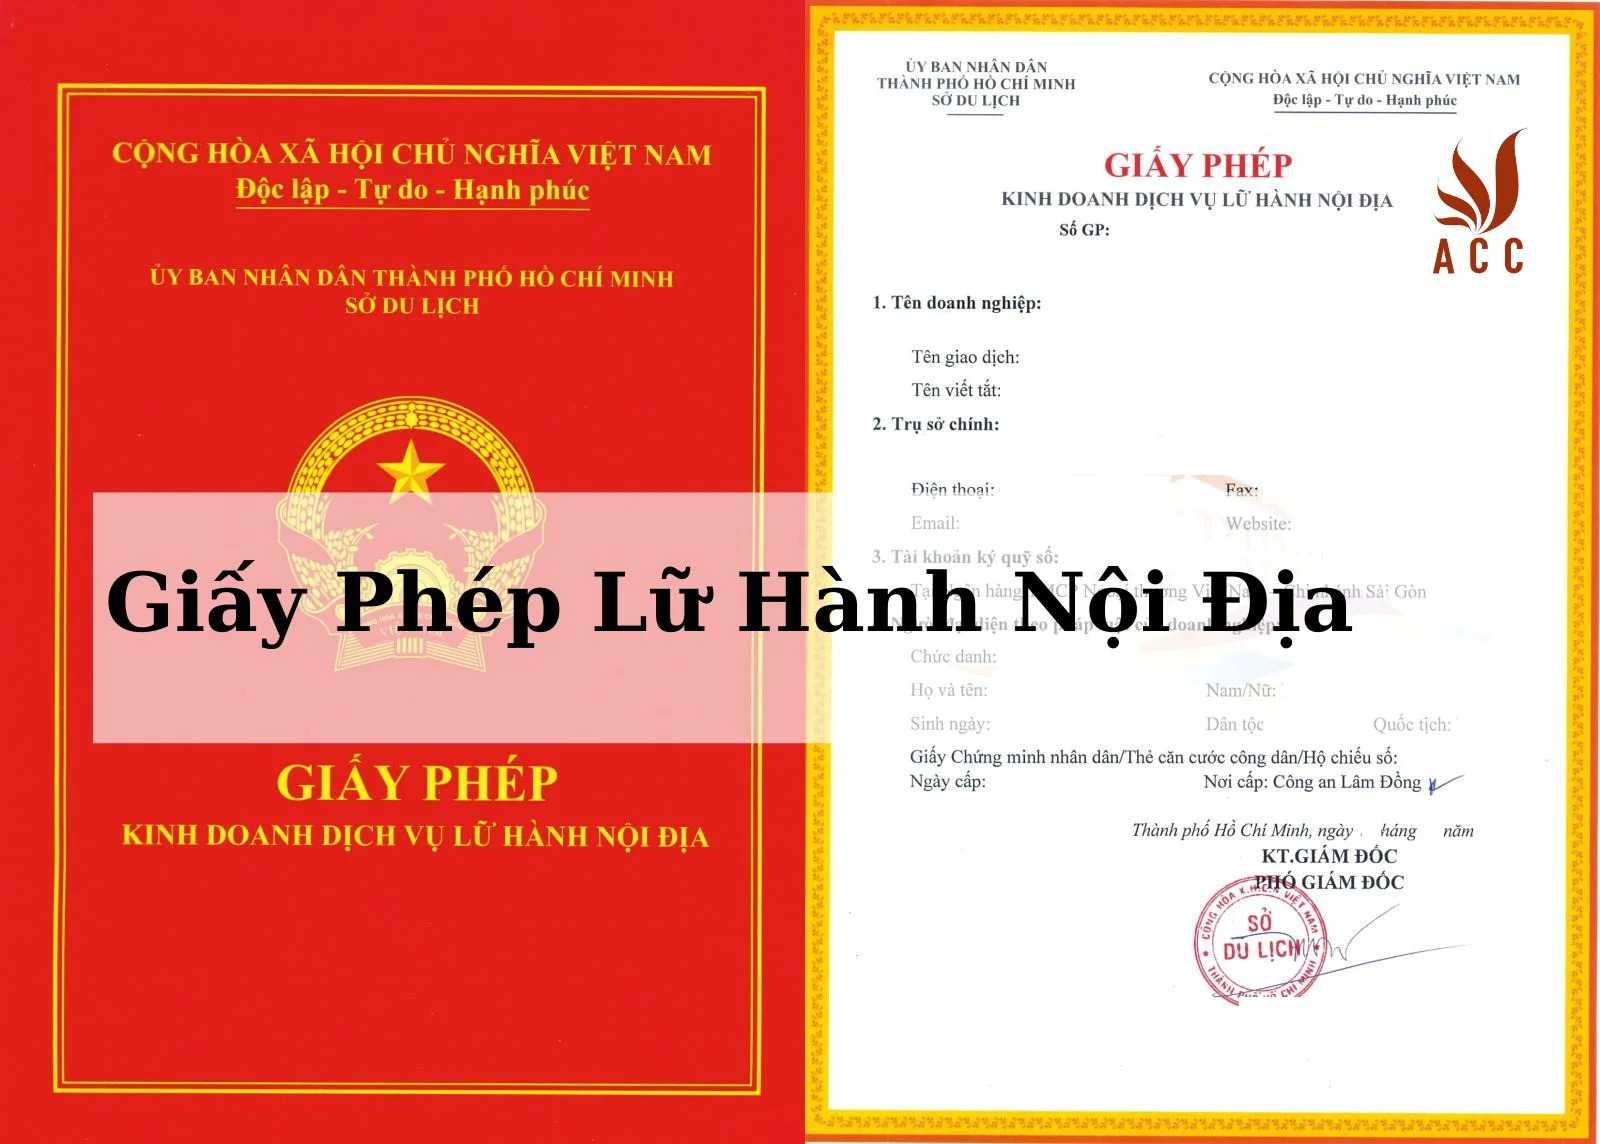 Giay Phep Lu Hanh Noi Dia